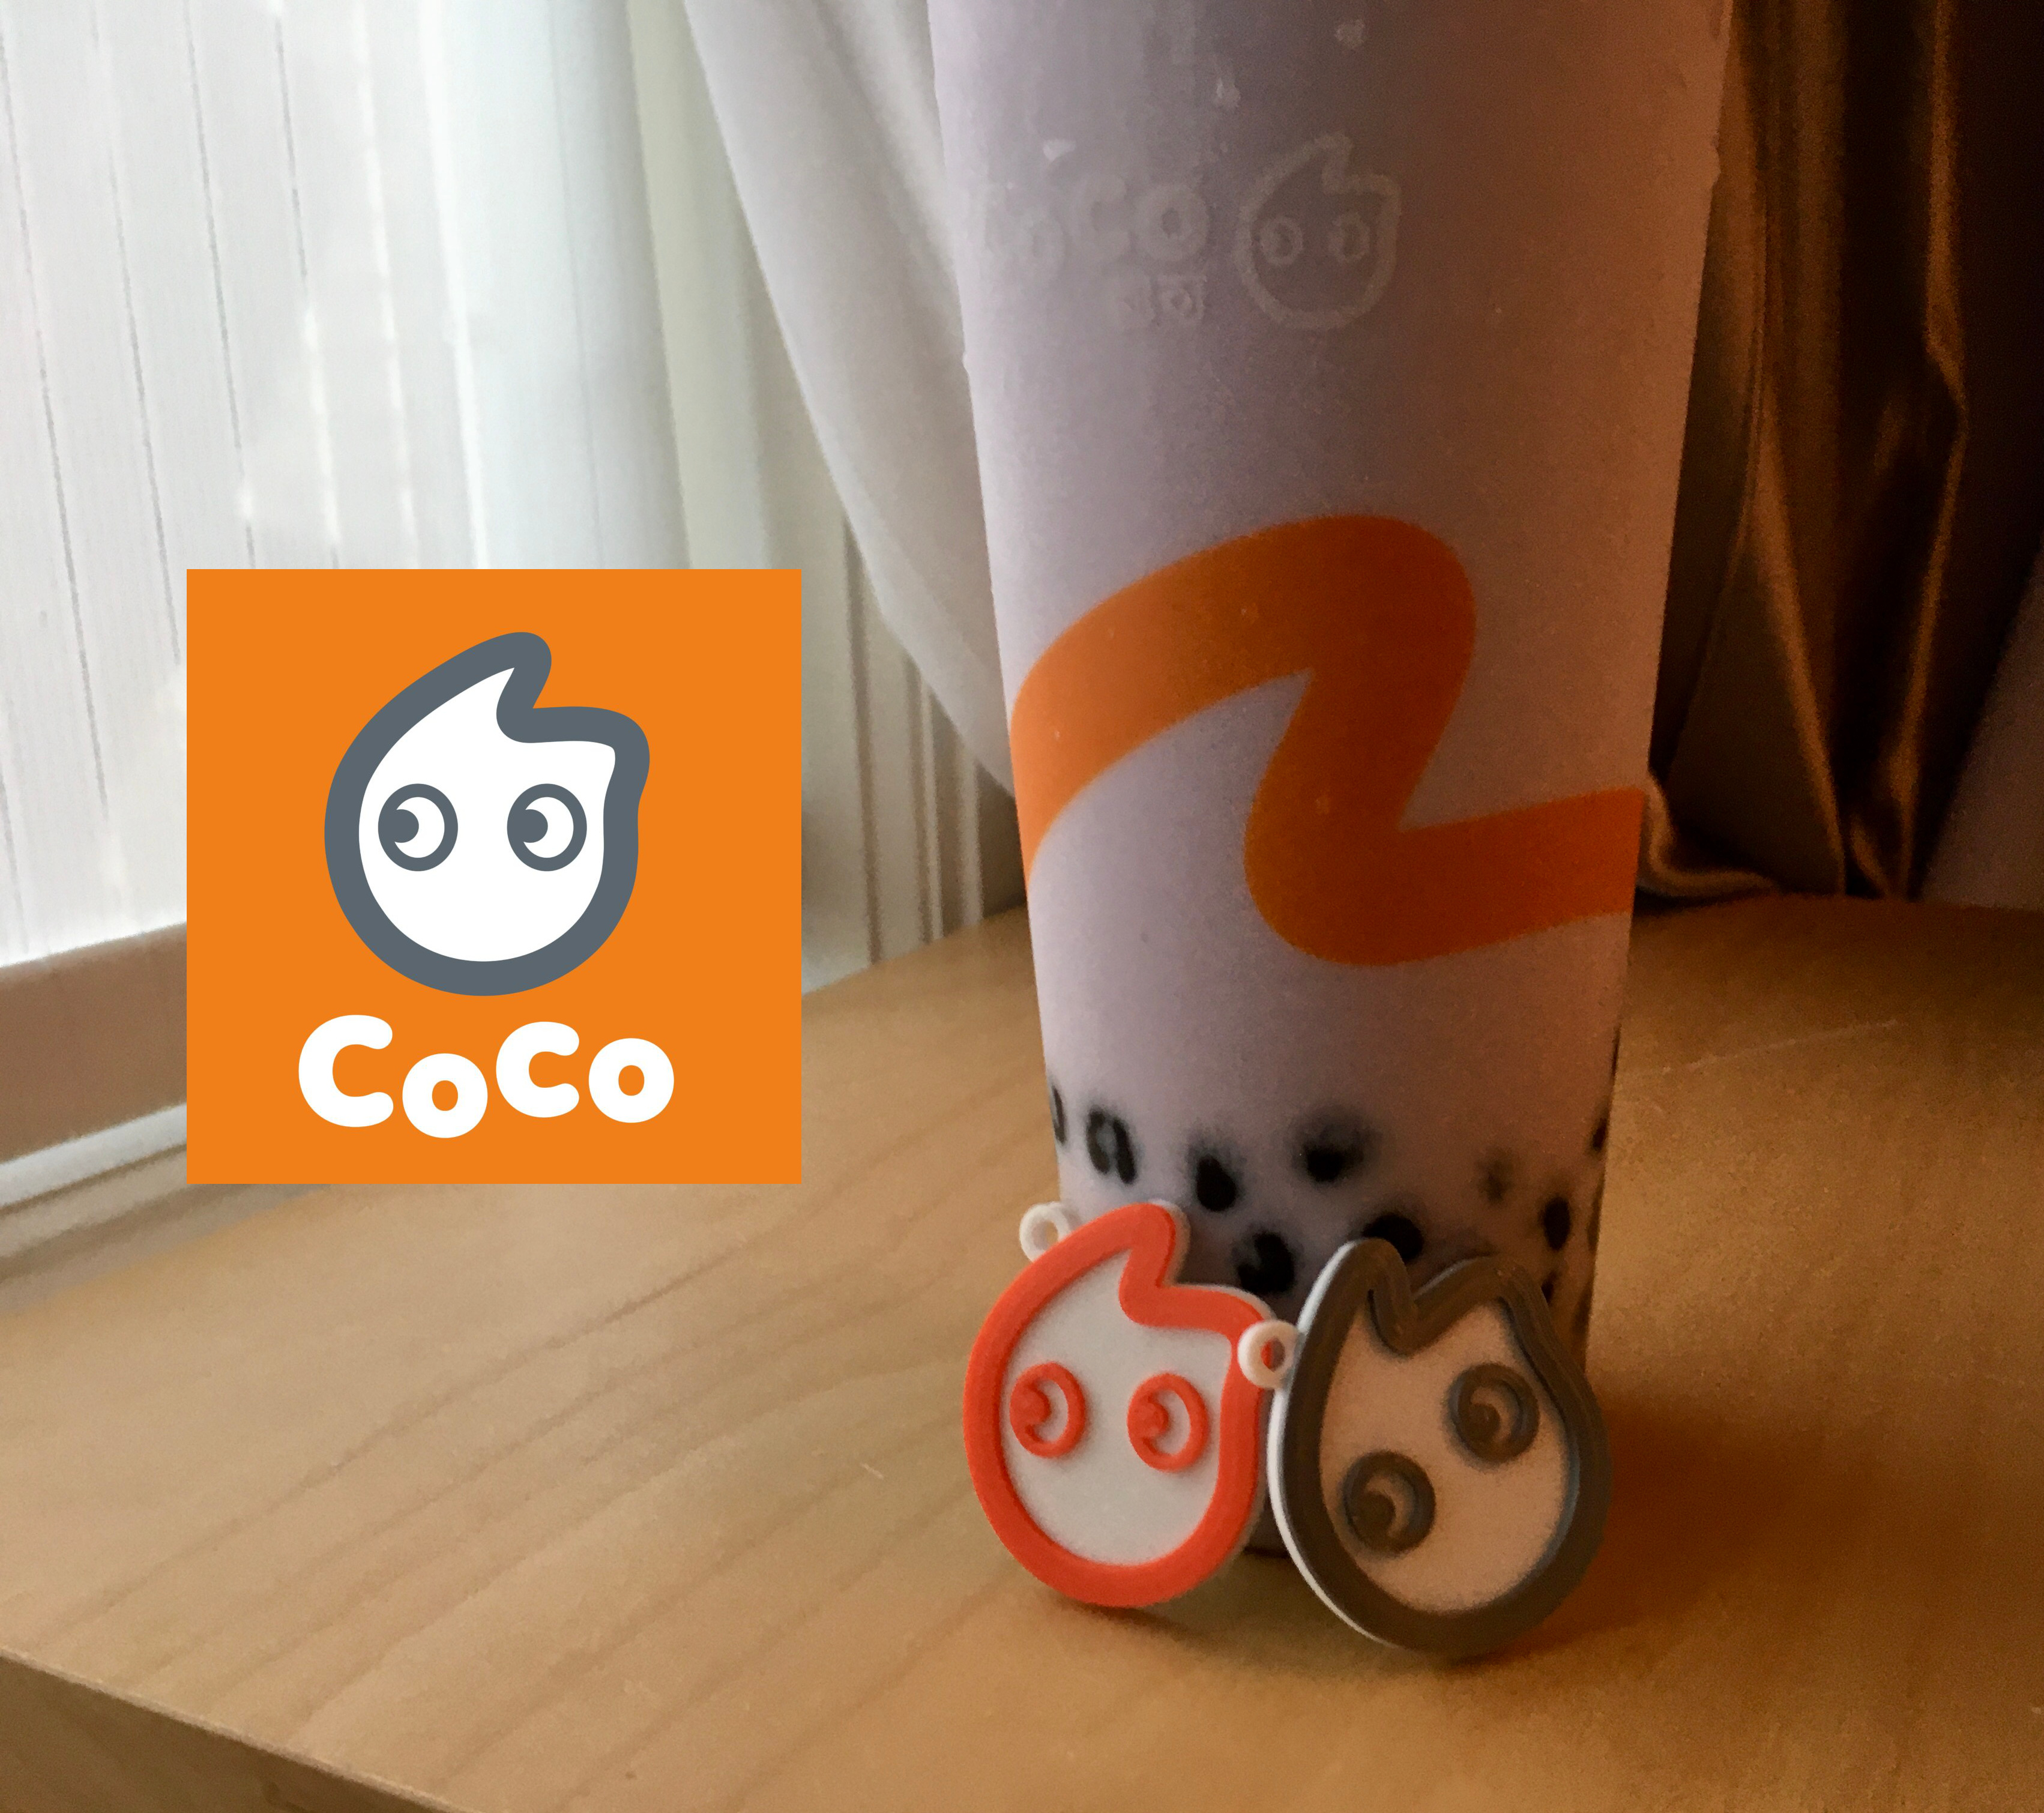 CoCo's Bubble tea logo keychain